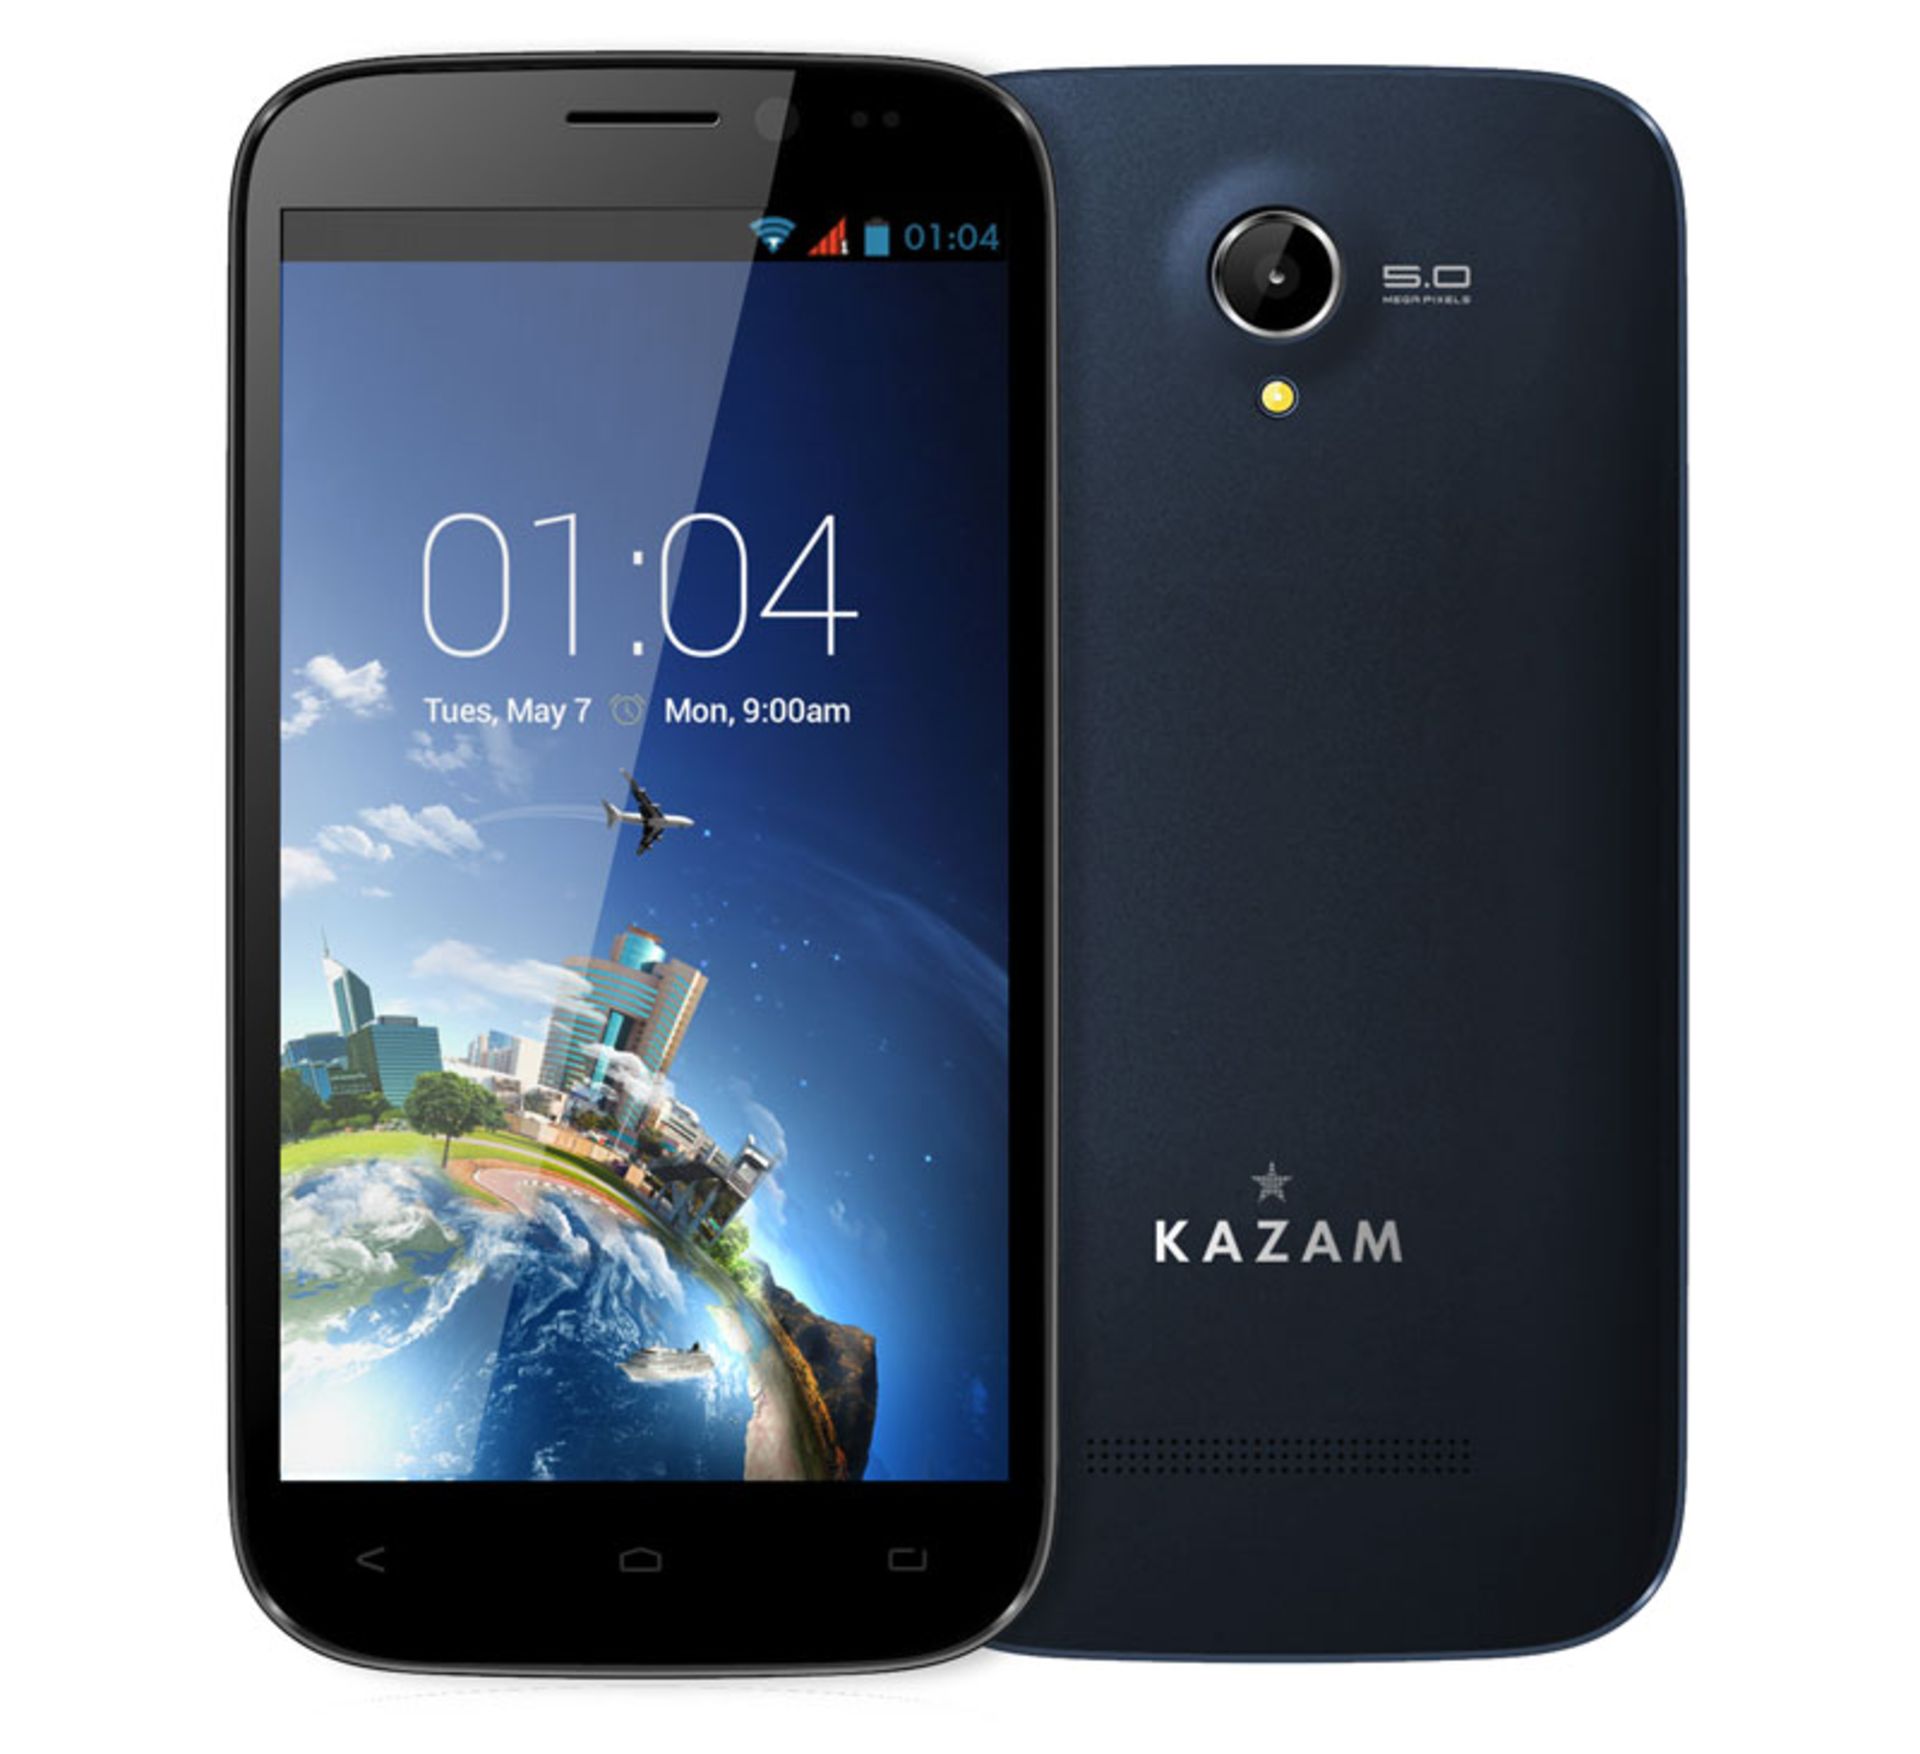 V *TRADE QTY* Brand New Kazam Trooper X4.5 Dual Sim Smartphone ISP £114.00 (Handtec) X 4 Bid price